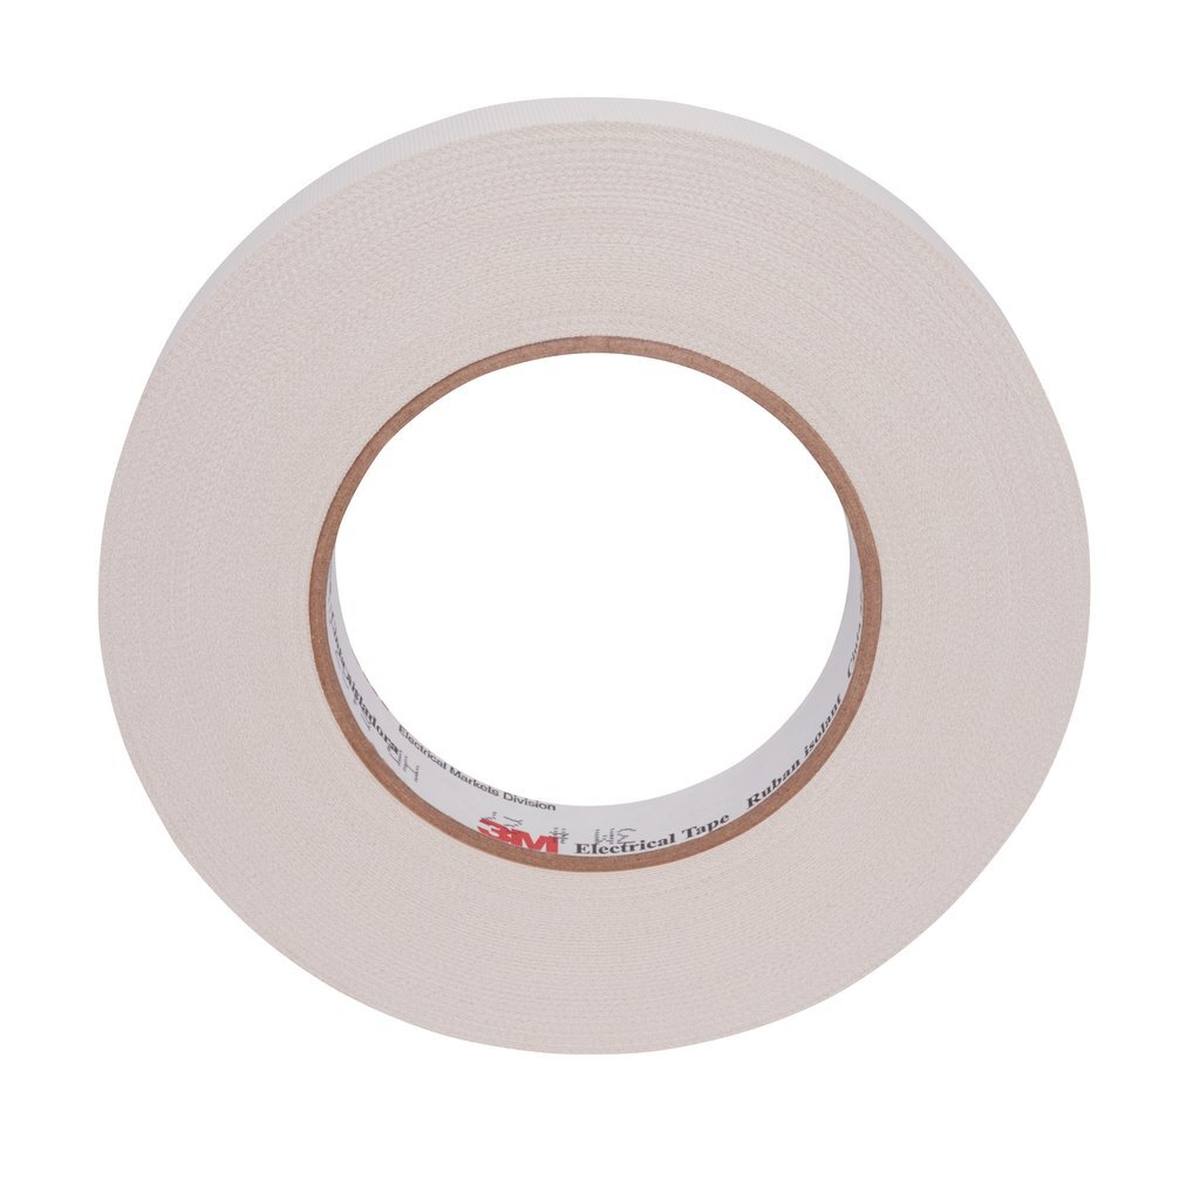 3M Scotch ET 27U Glass fabric tape, white, 12 mm x 55 m, 0.18 mm